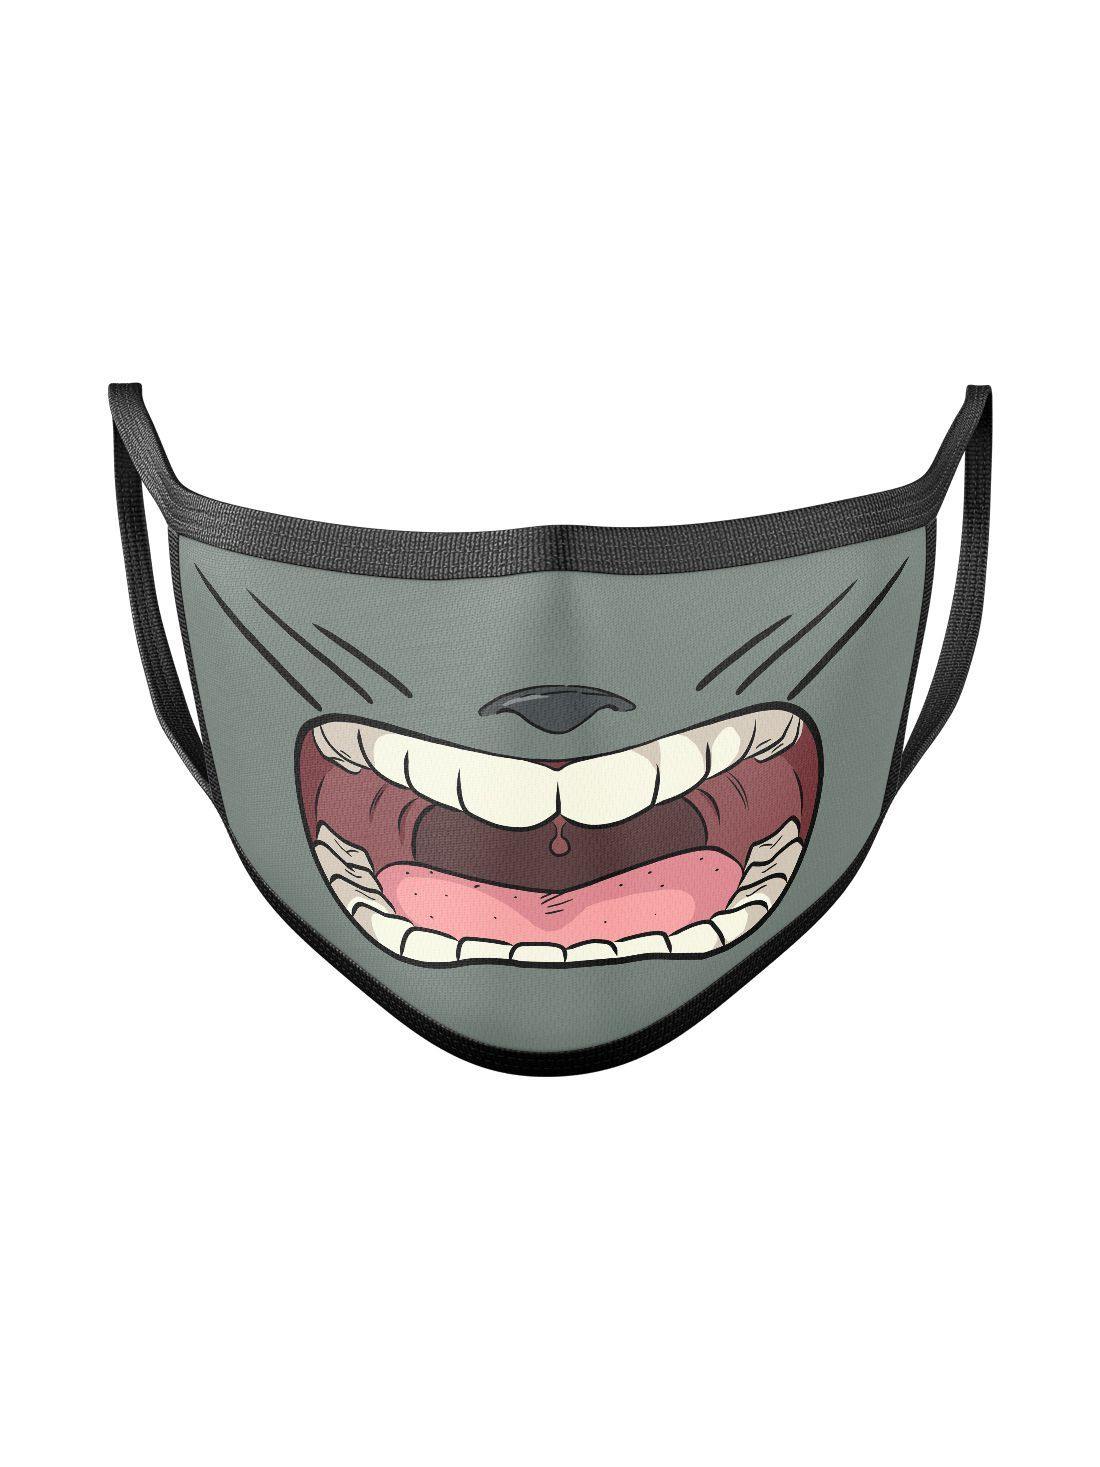 Anime Totoro Yawn Face Mask - ComicSense